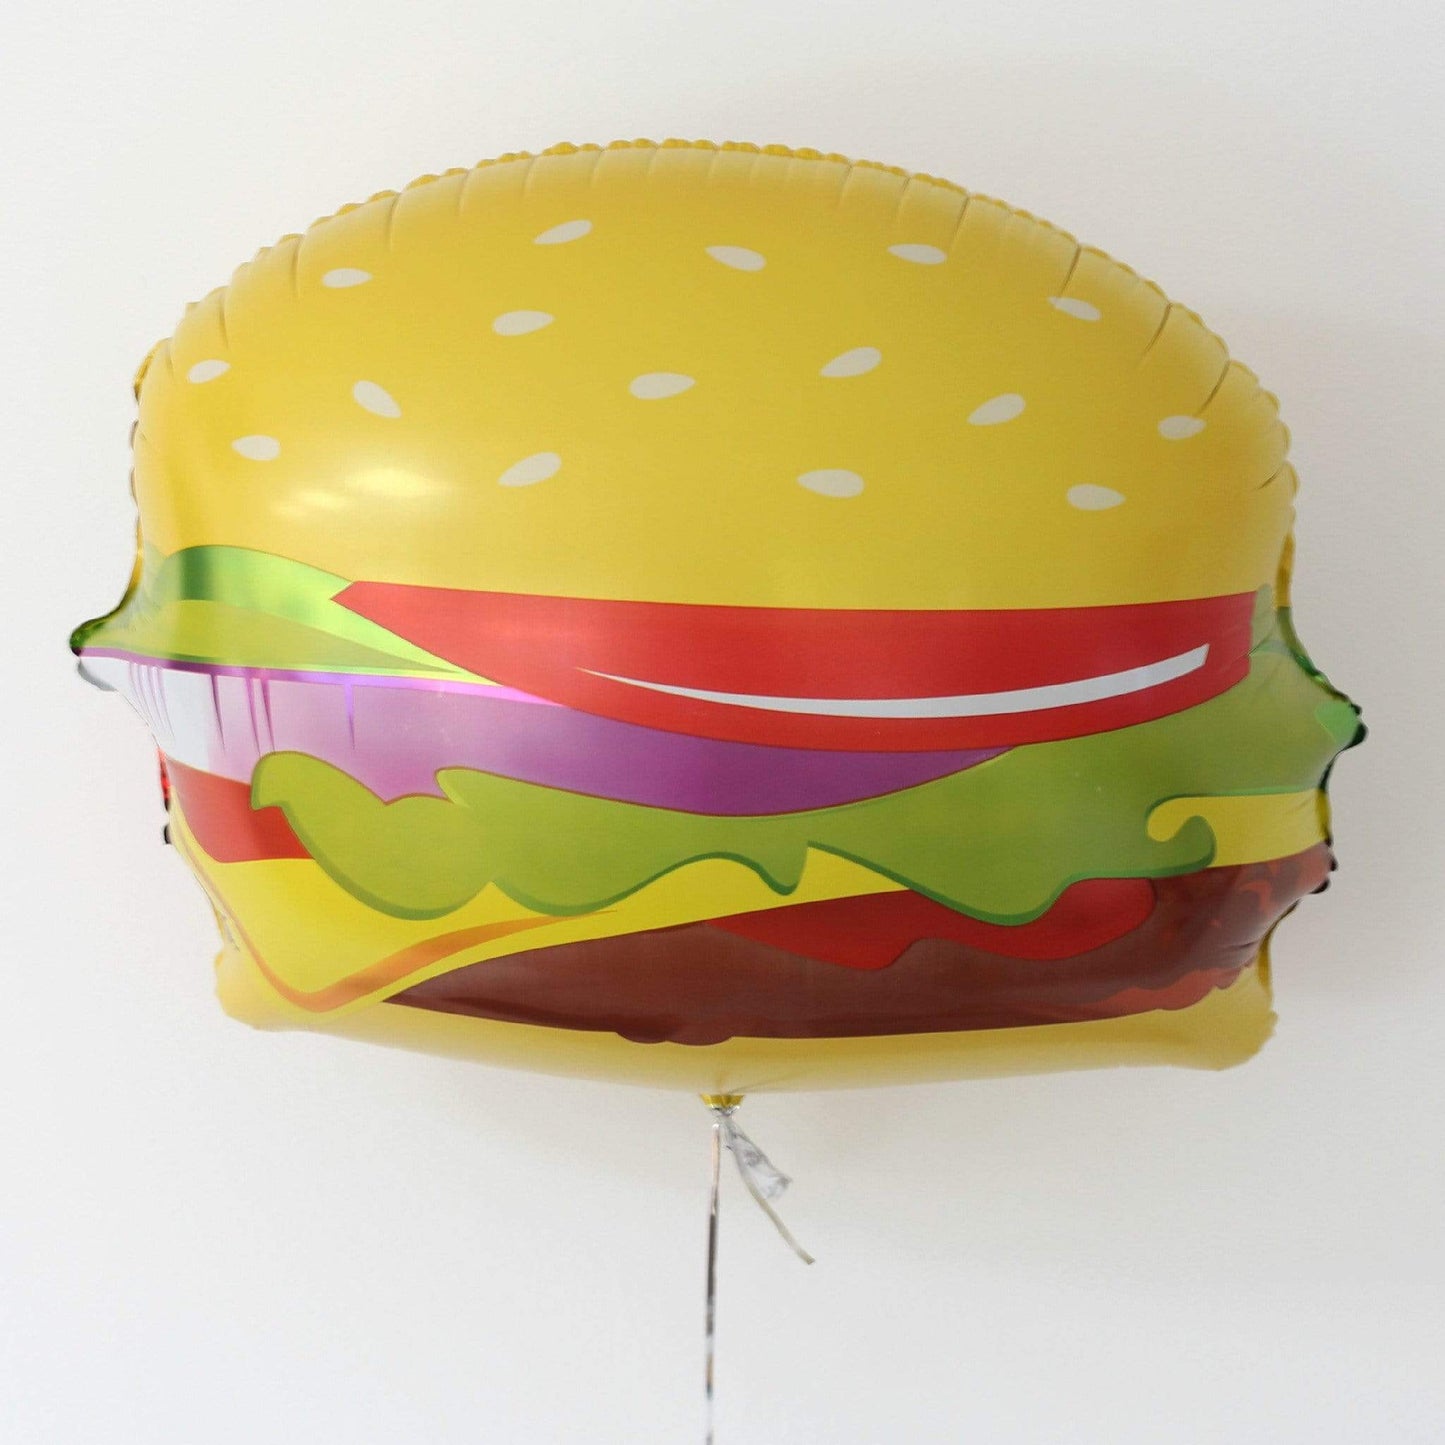 Giant Burger Balloon | Big Foil Shape Balloon | Helium Balloons Online Betallic